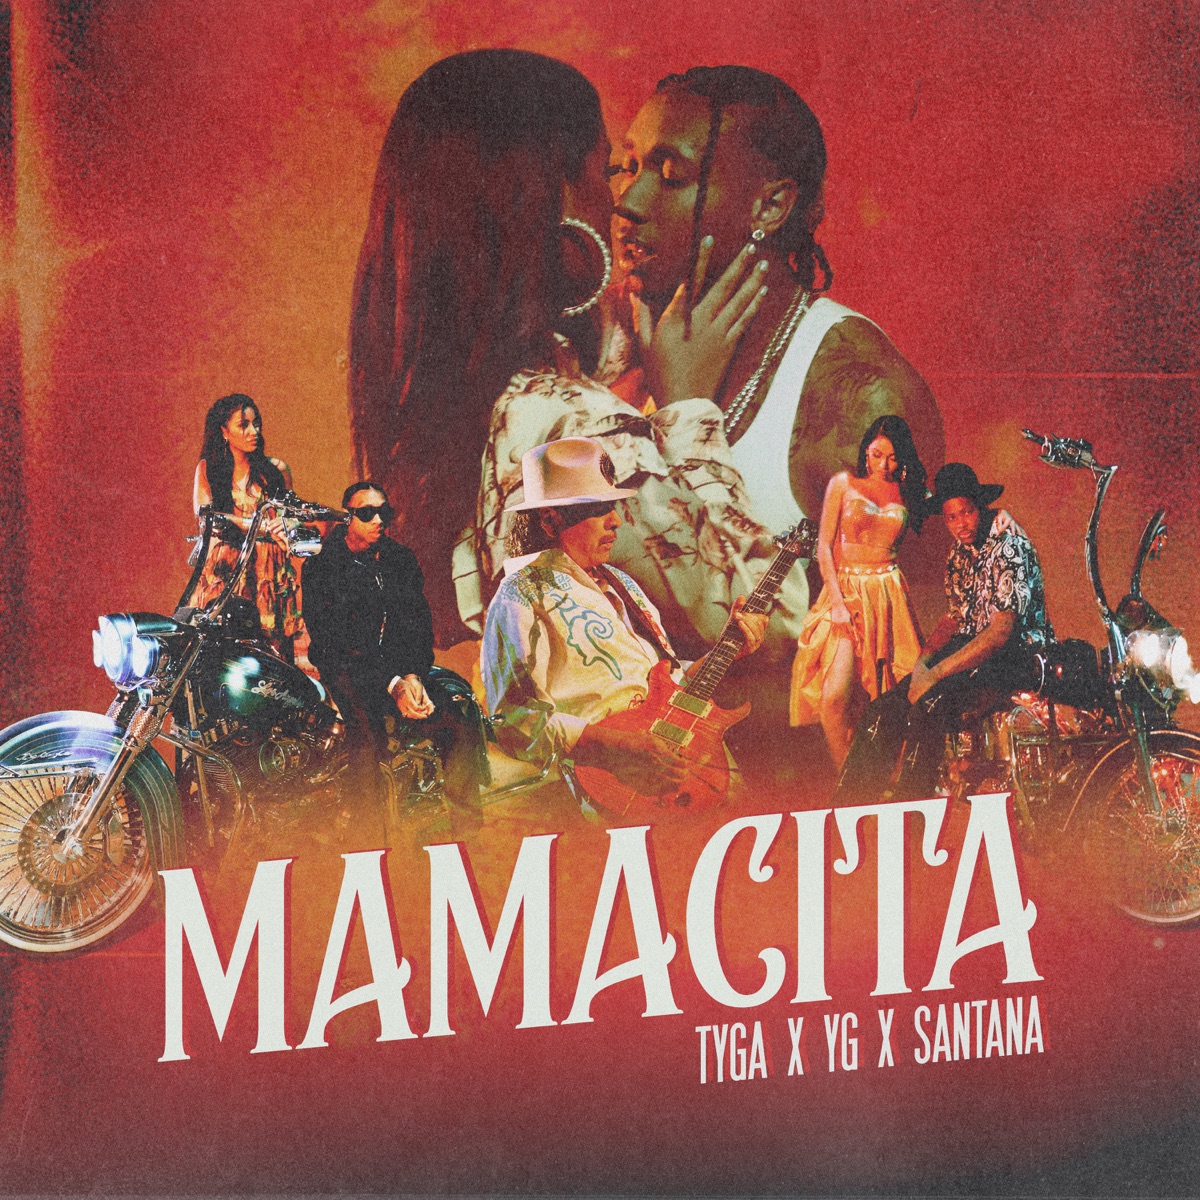 MAMACITA - Single - Album by Tyga, YG & Santana - Apple Music